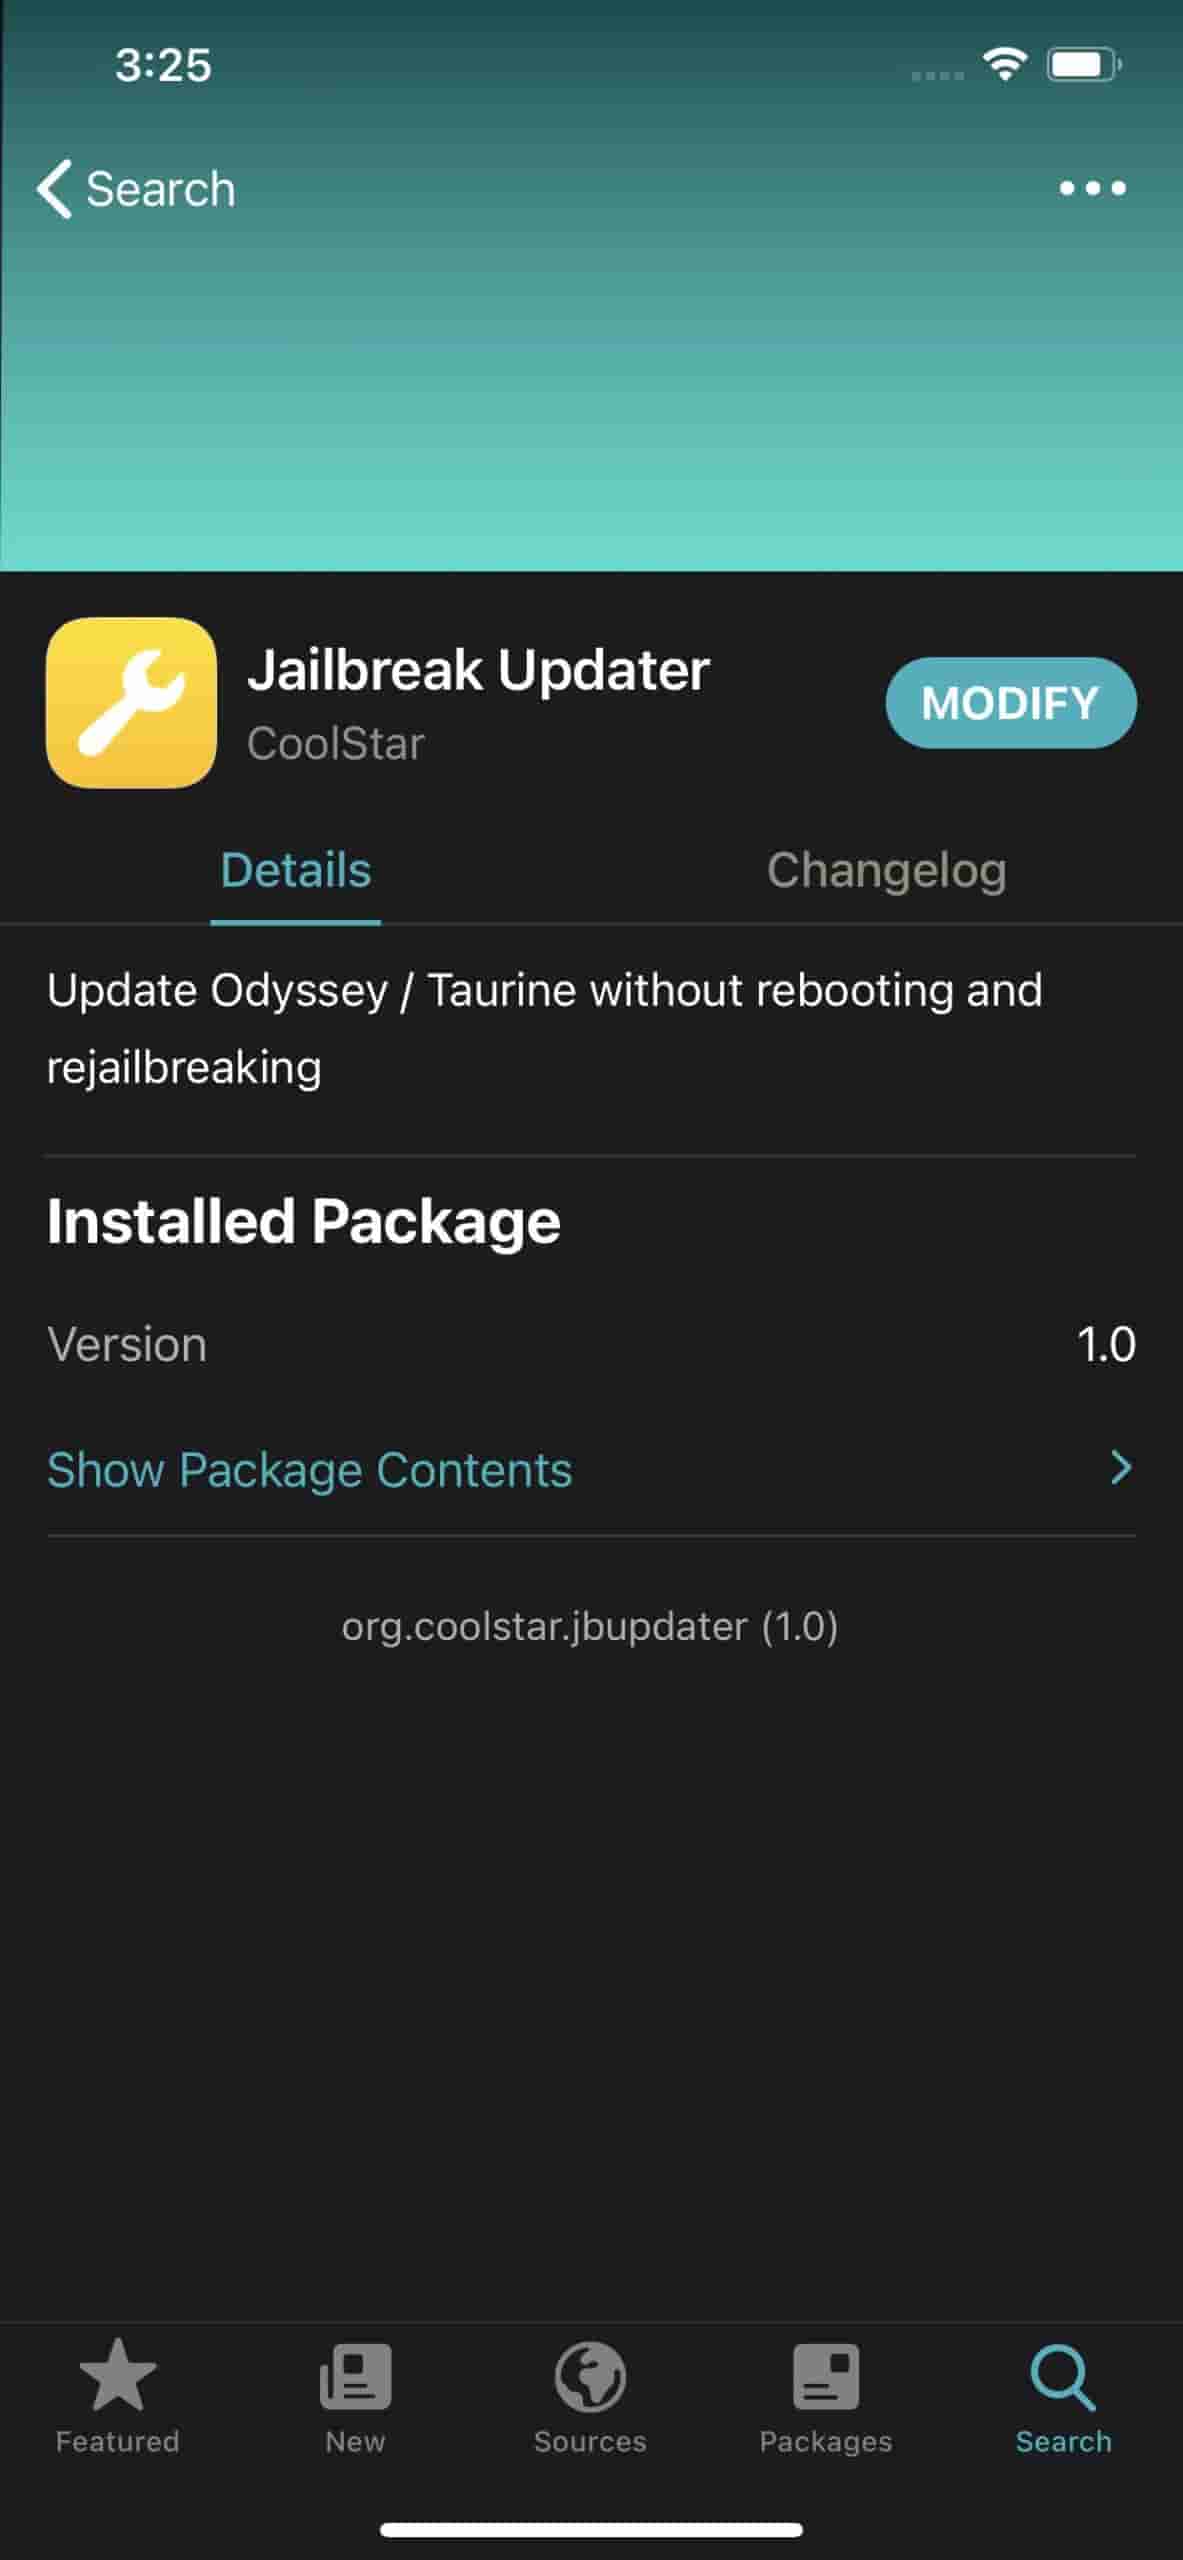 Jailbreak Updater – update to the Odyssey / Taurine jailbreak while already in a jailbroken state